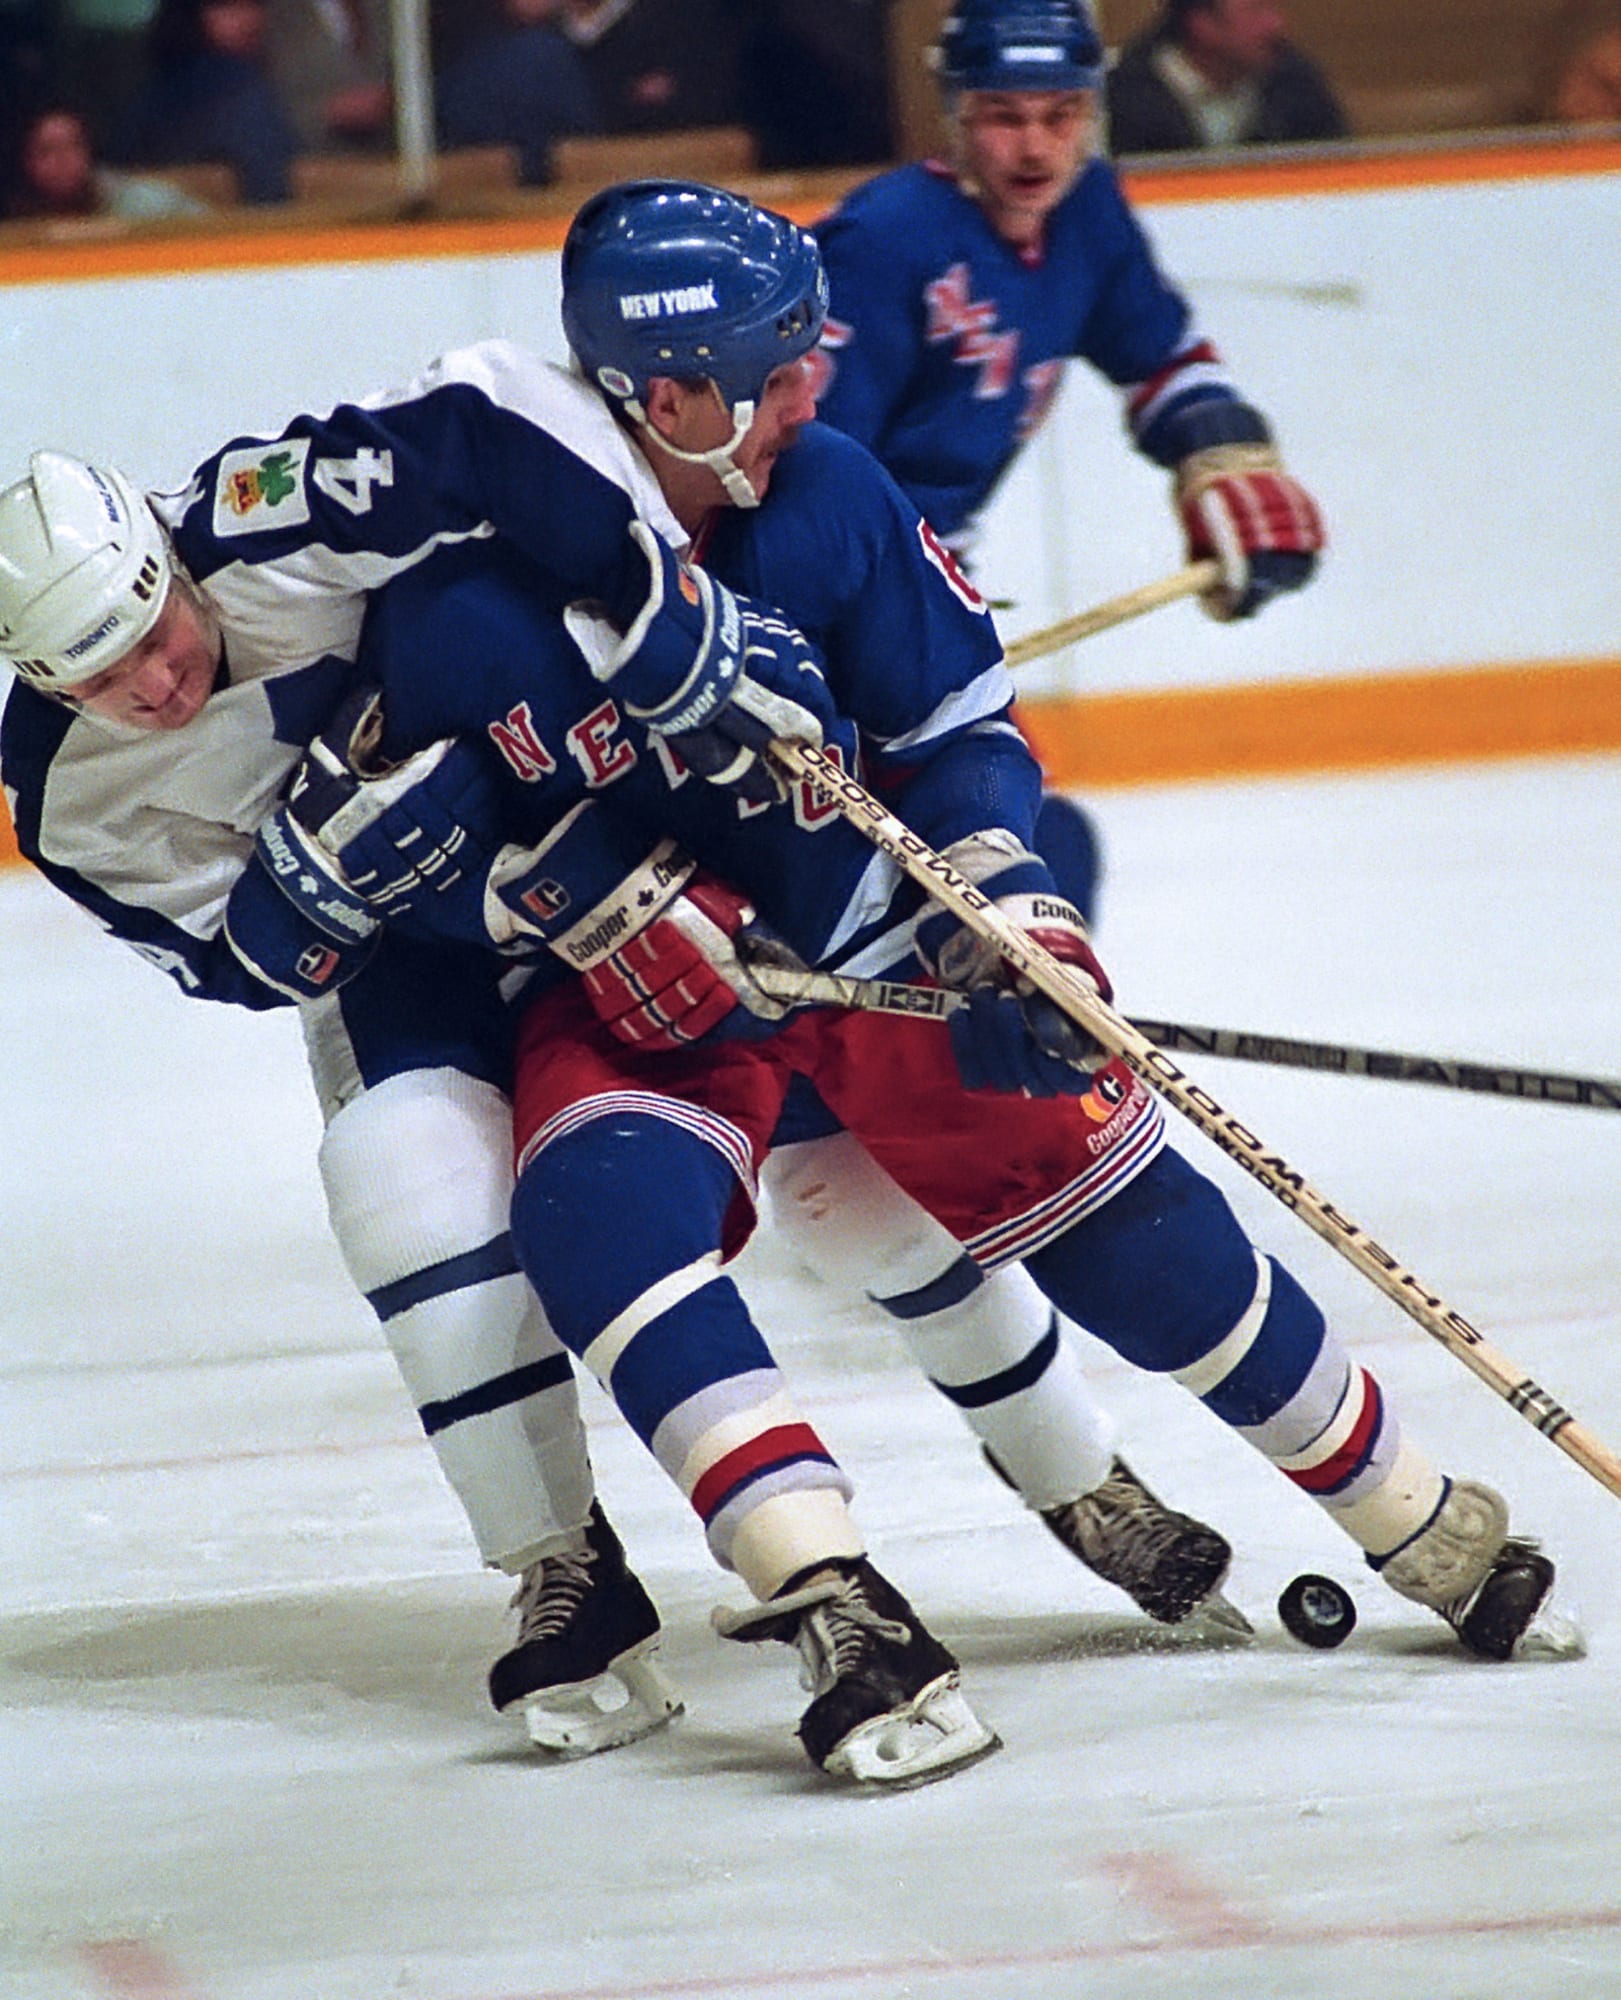 Walt McKechnie Toronto Maple Leafs vs KEN DRYDEN Autographed 8x10